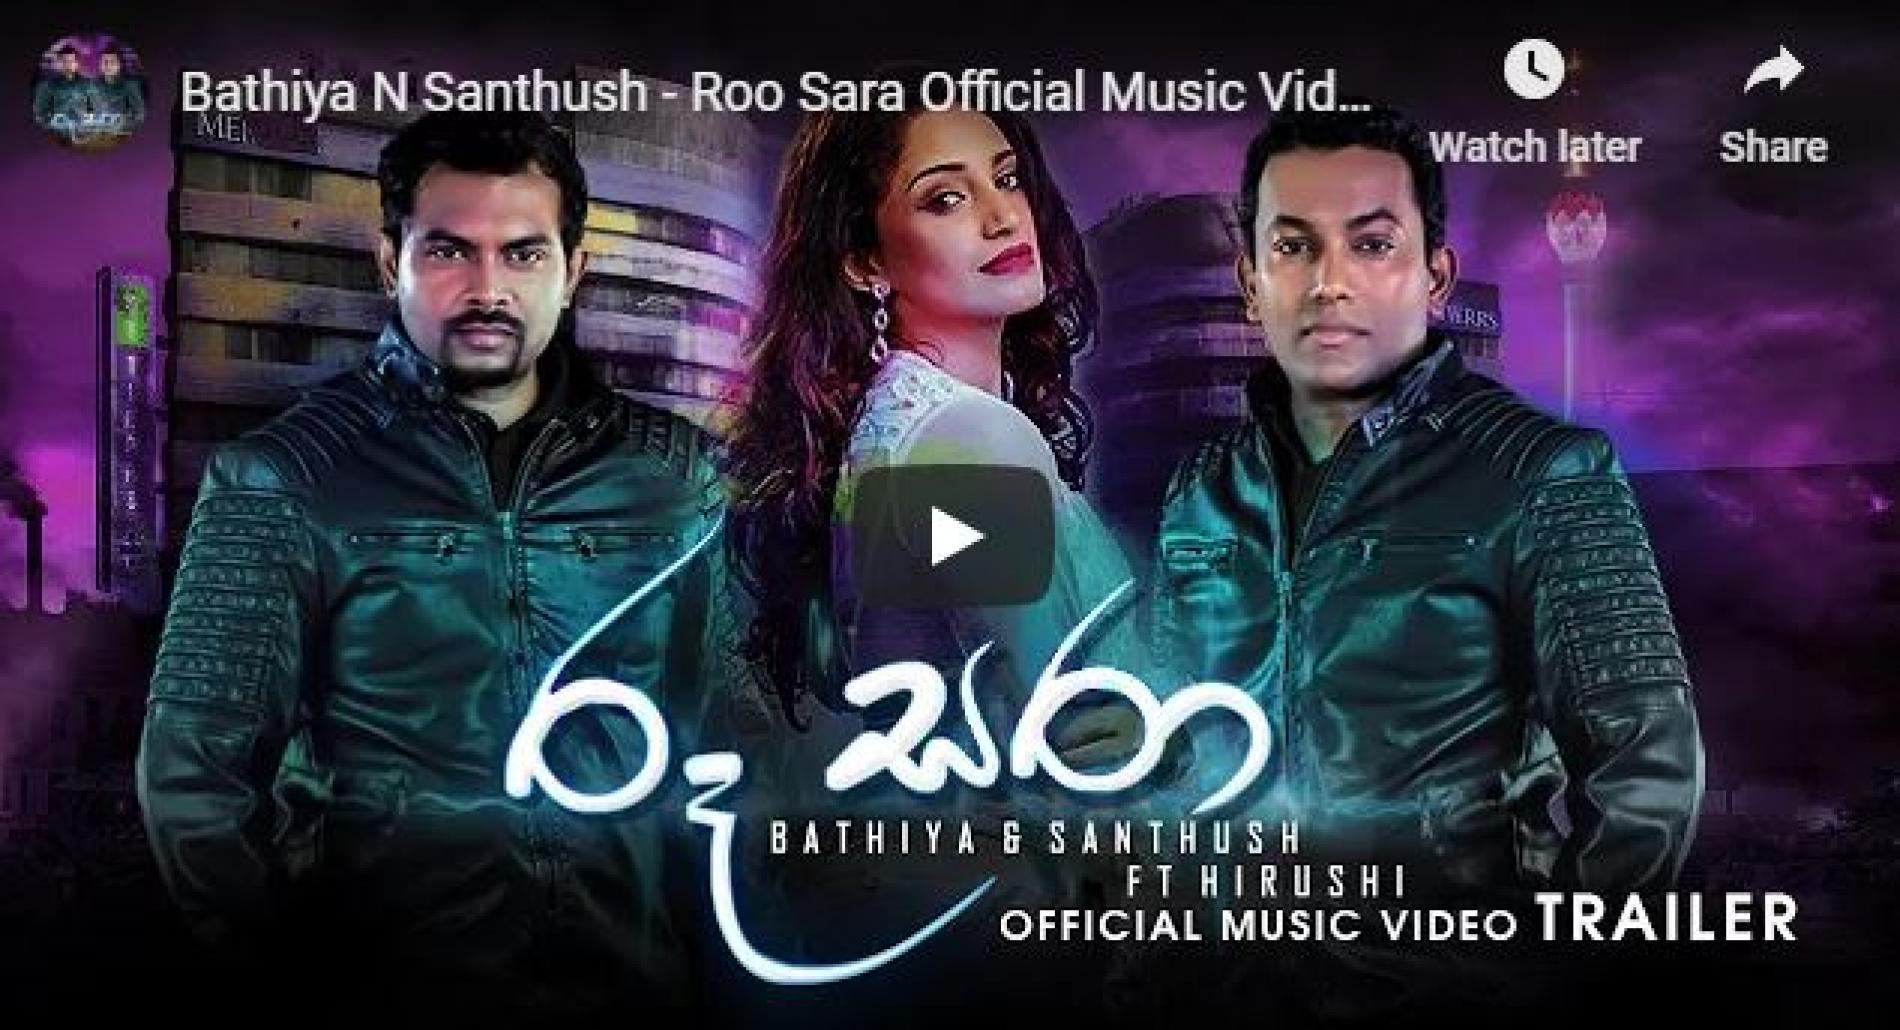 News : Bathiya N Santhush – Roo Sara Official Music Video Trailer